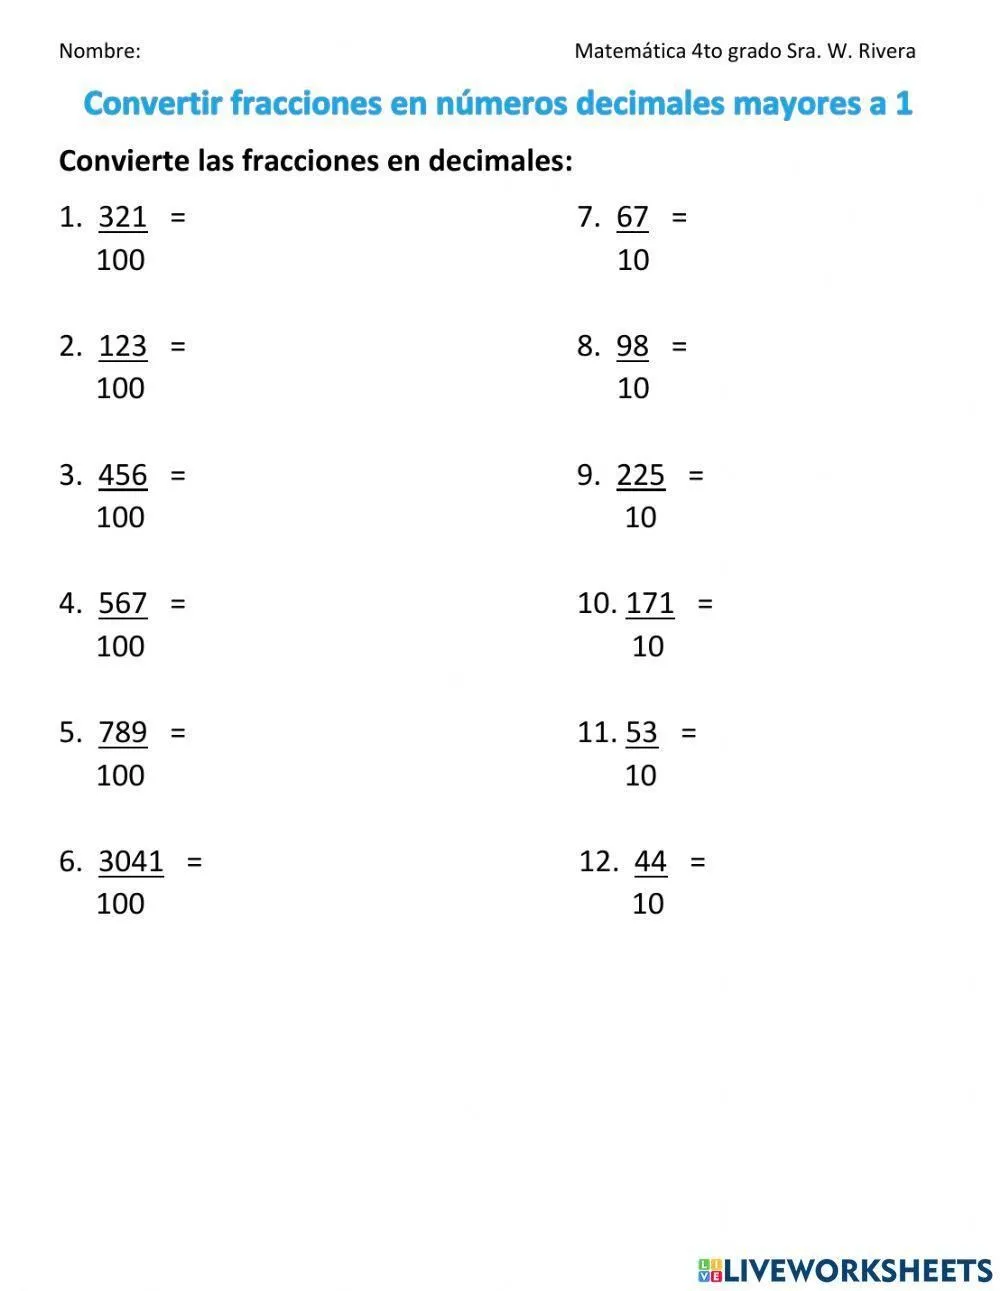 Convertir fracciones en números decimales mayores a 1 worksheet | Live  Worksheets